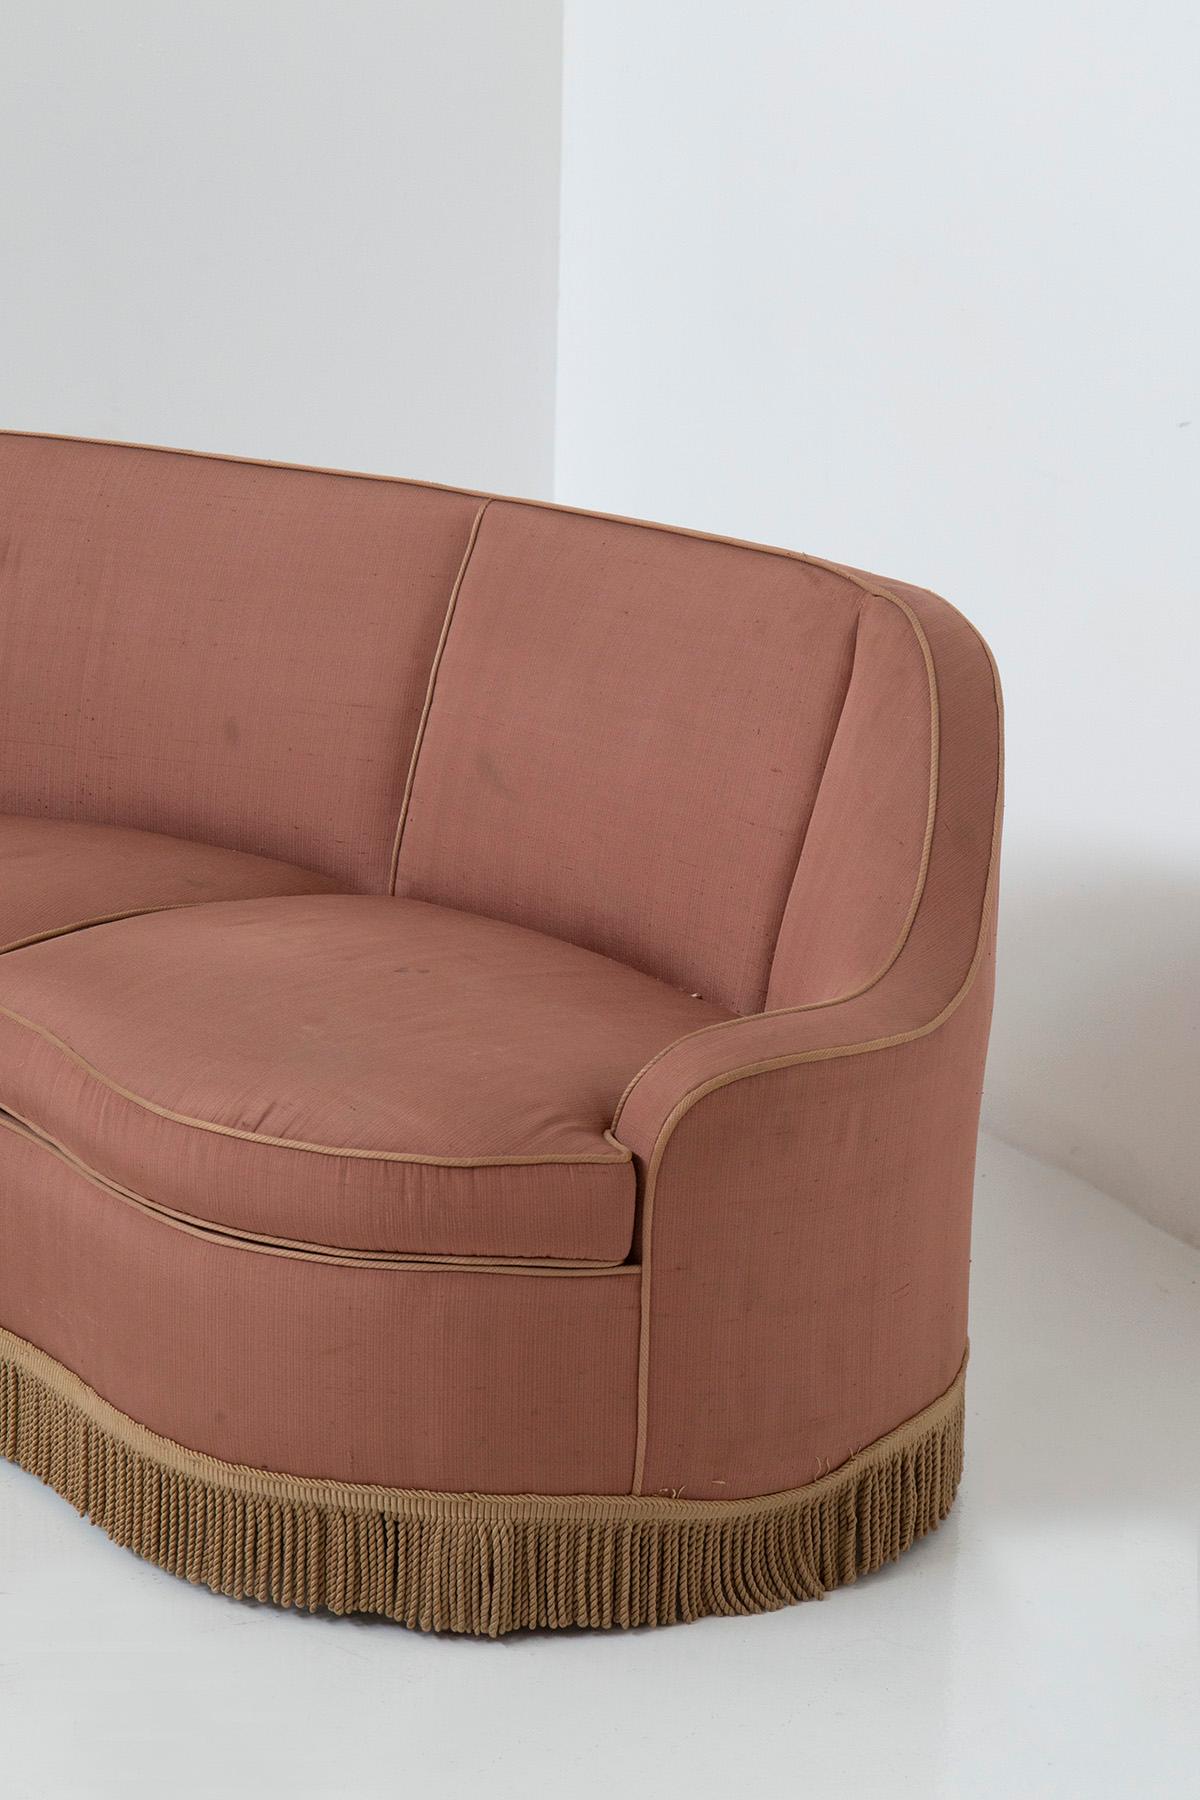 Mid-20th Century Italian three-seater sofa in pink fabric attributed to Gio Ponti